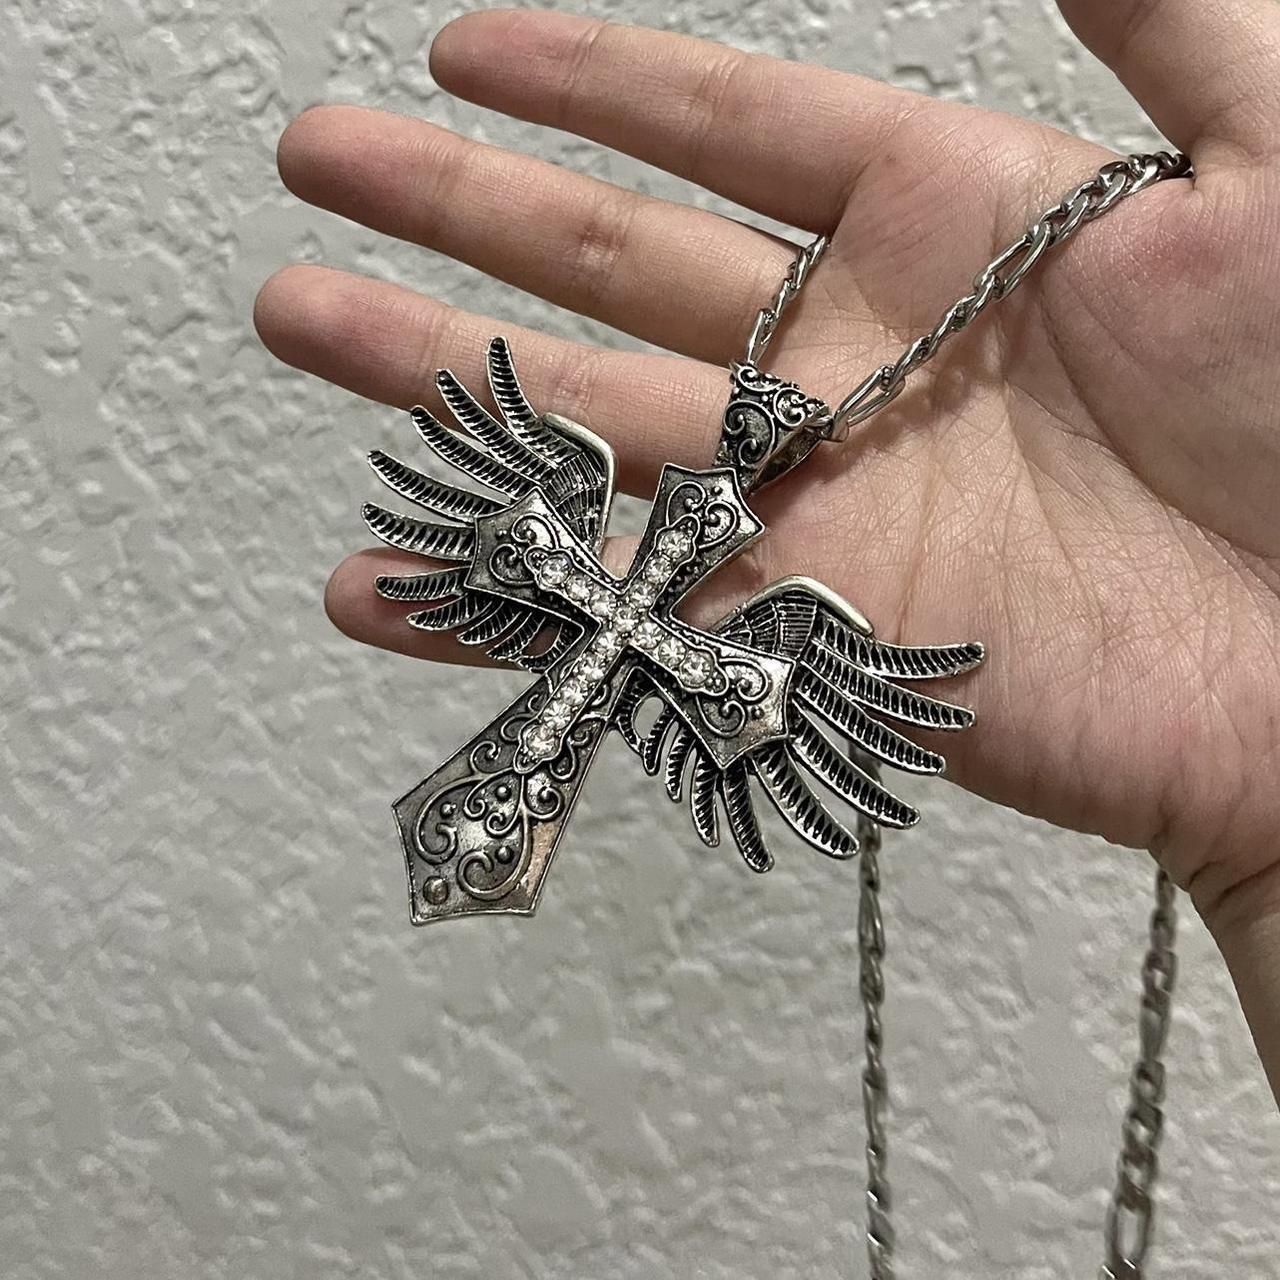 Celine Cross Necklace Vintage Silver Gothic Grunge Jewelry Y2k - Etsy |  Cross jewelry, Cross necklace silver, Silver cross pendant